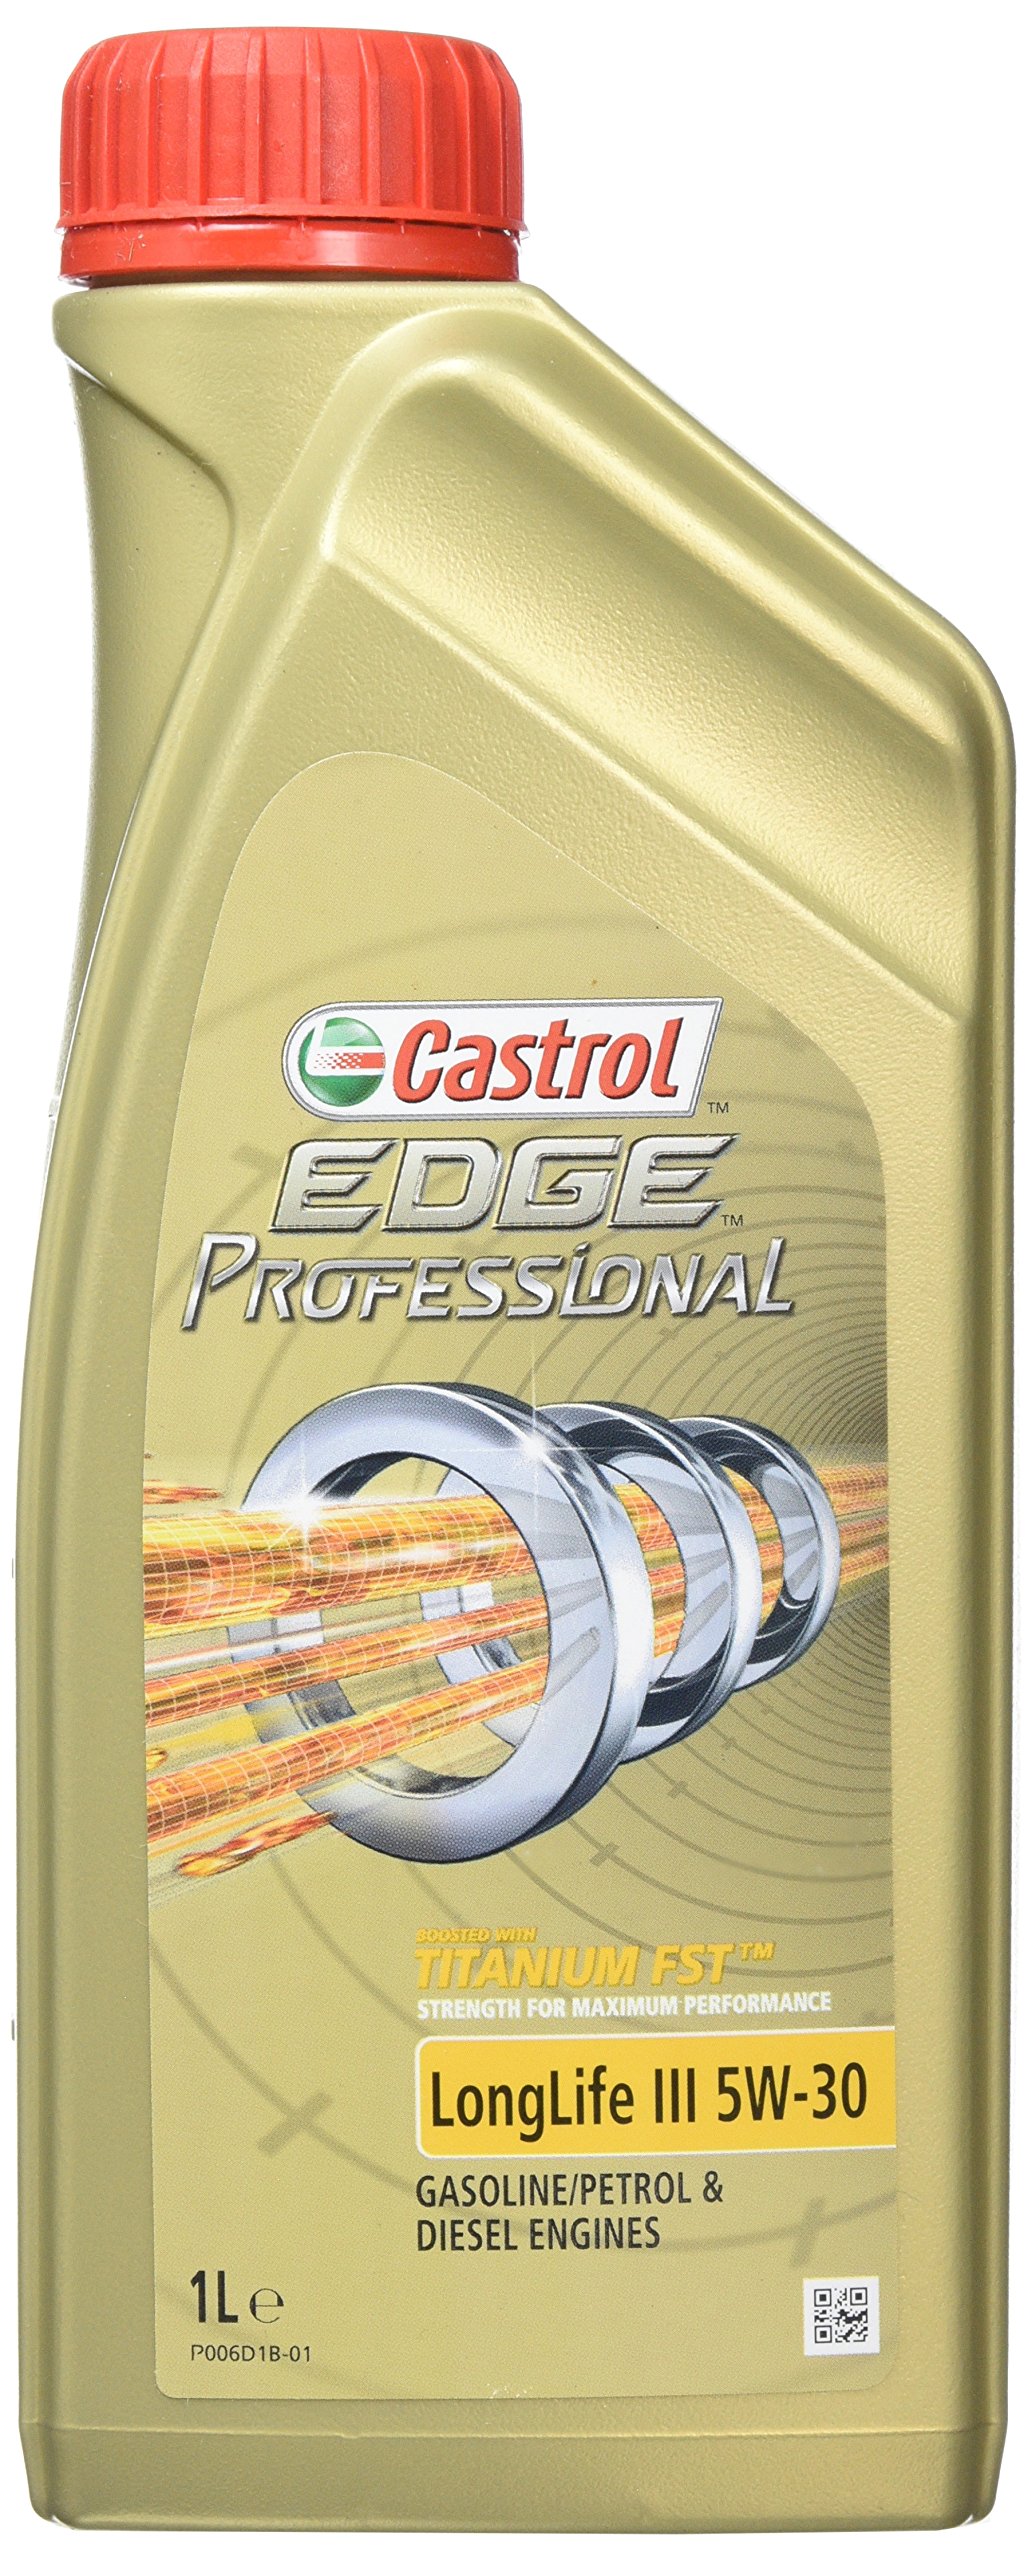 Castrol 157ea8 Edge Professional Longlife III 5 W-30 von Castrol